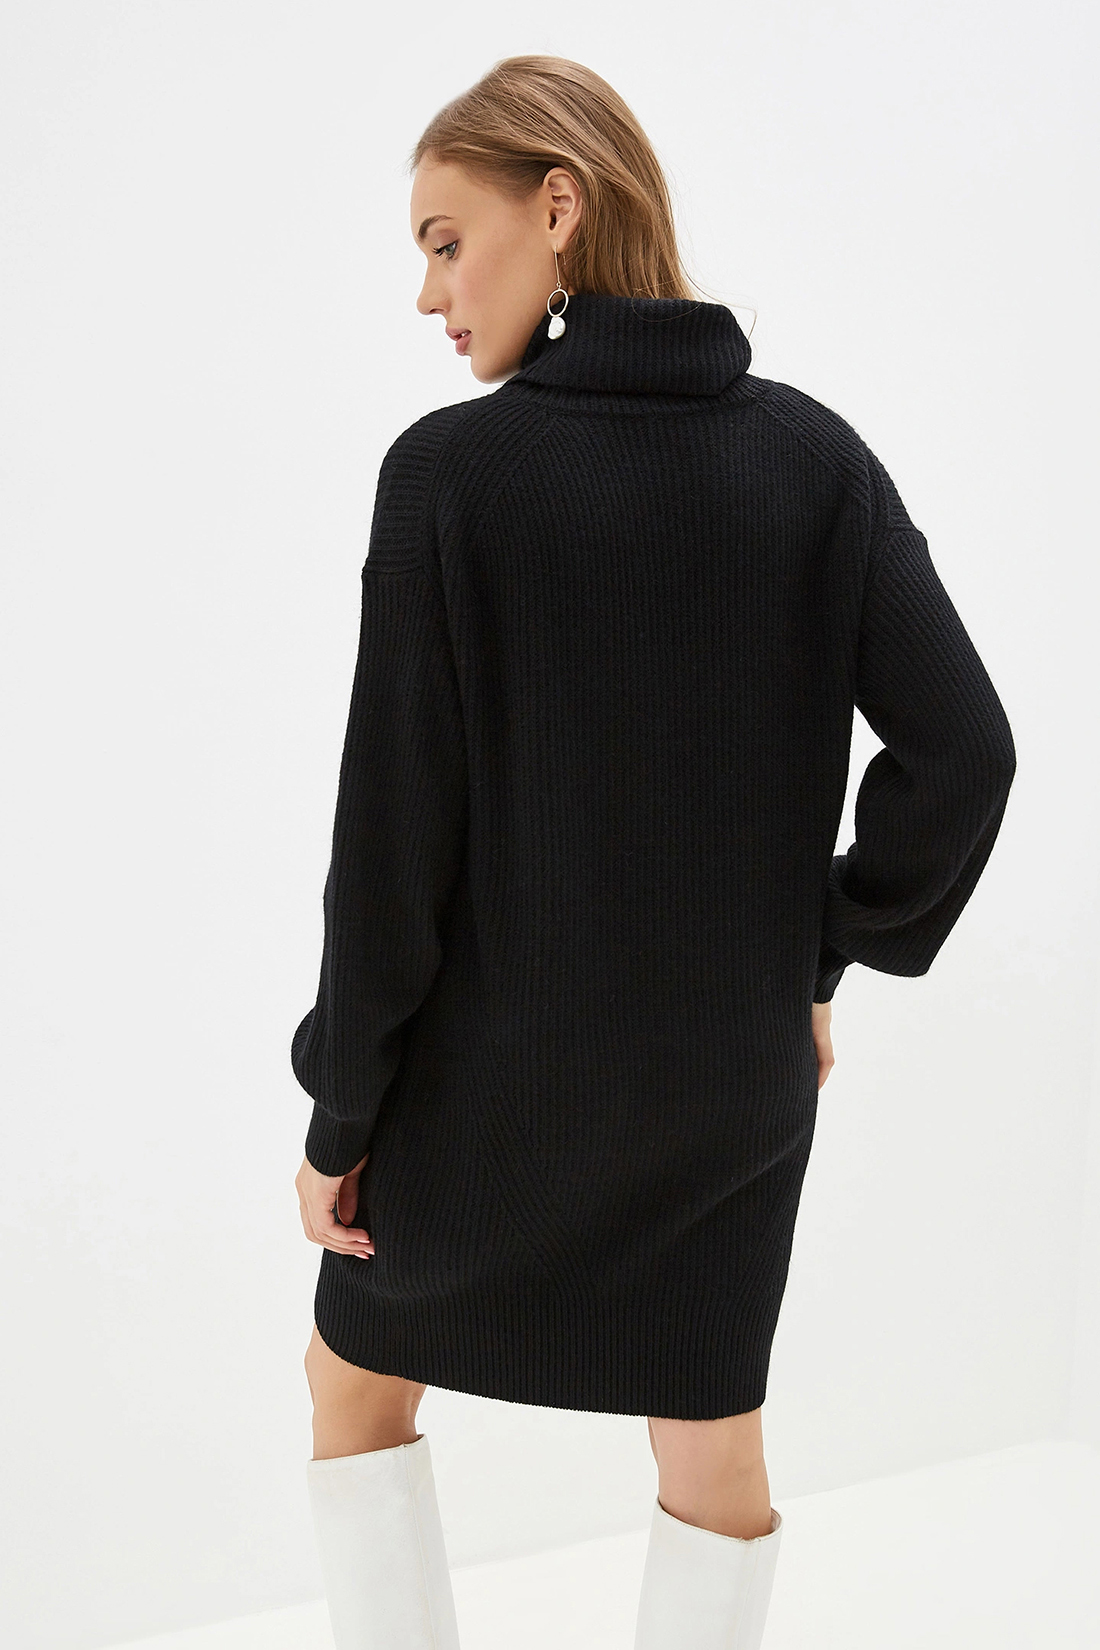 Платье-свитер с ангорой (арт. baon B459538), размер L, цвет черный Платье-свитер с ангорой (арт. baon B459538) - фото 2